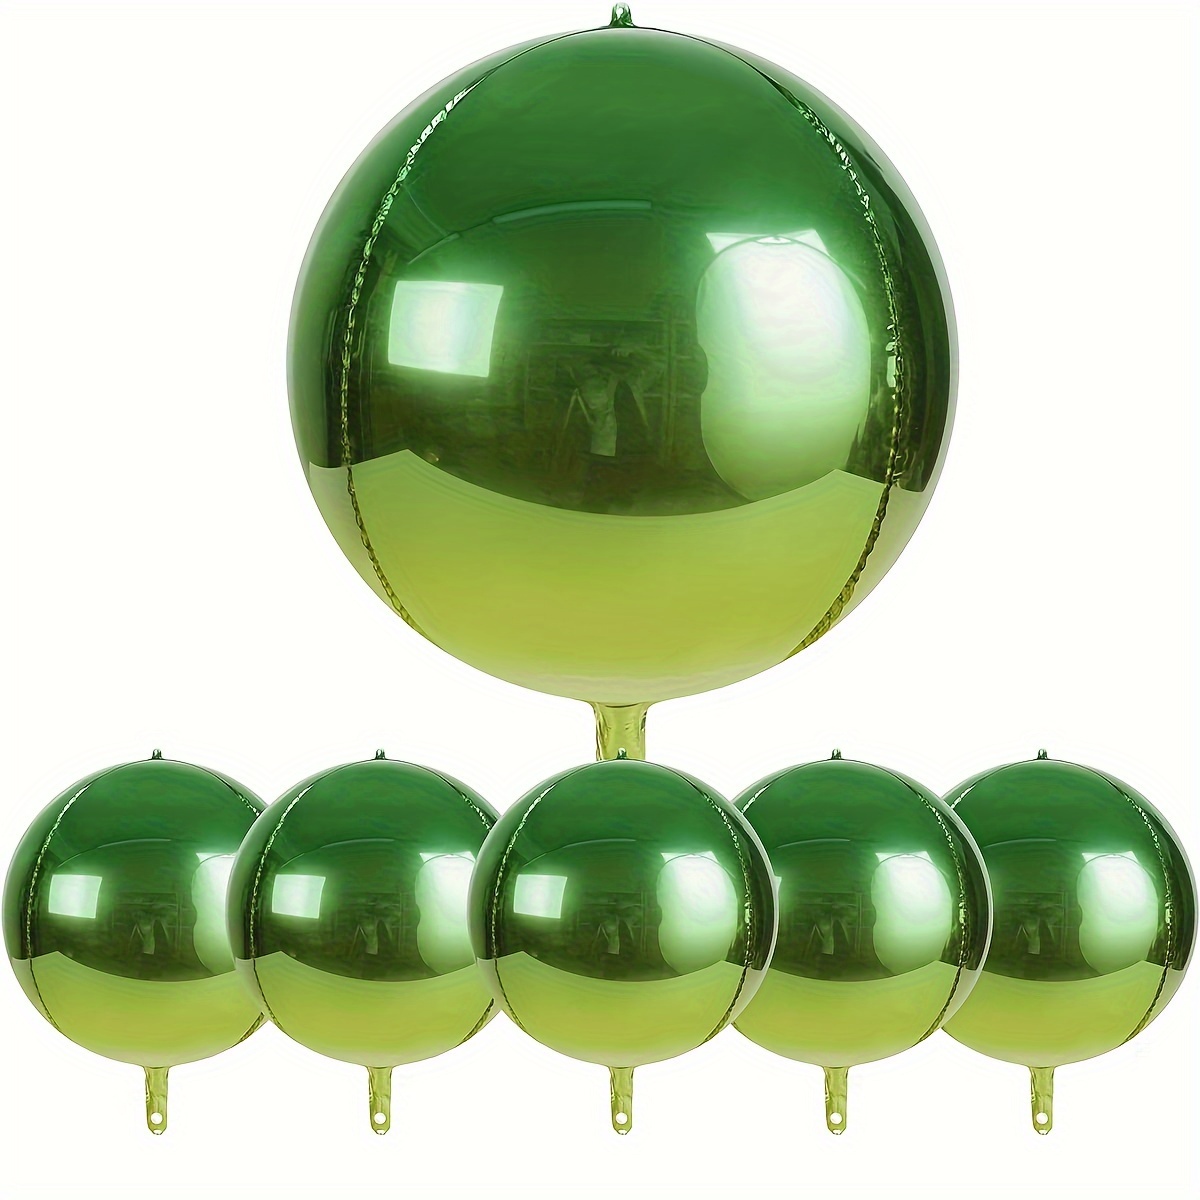 Globos verdes cromados de 12 pulgadas, globos metálicos de doble capa verde  oscuro, globos de látex de látex metálico verde oscuro brillante para